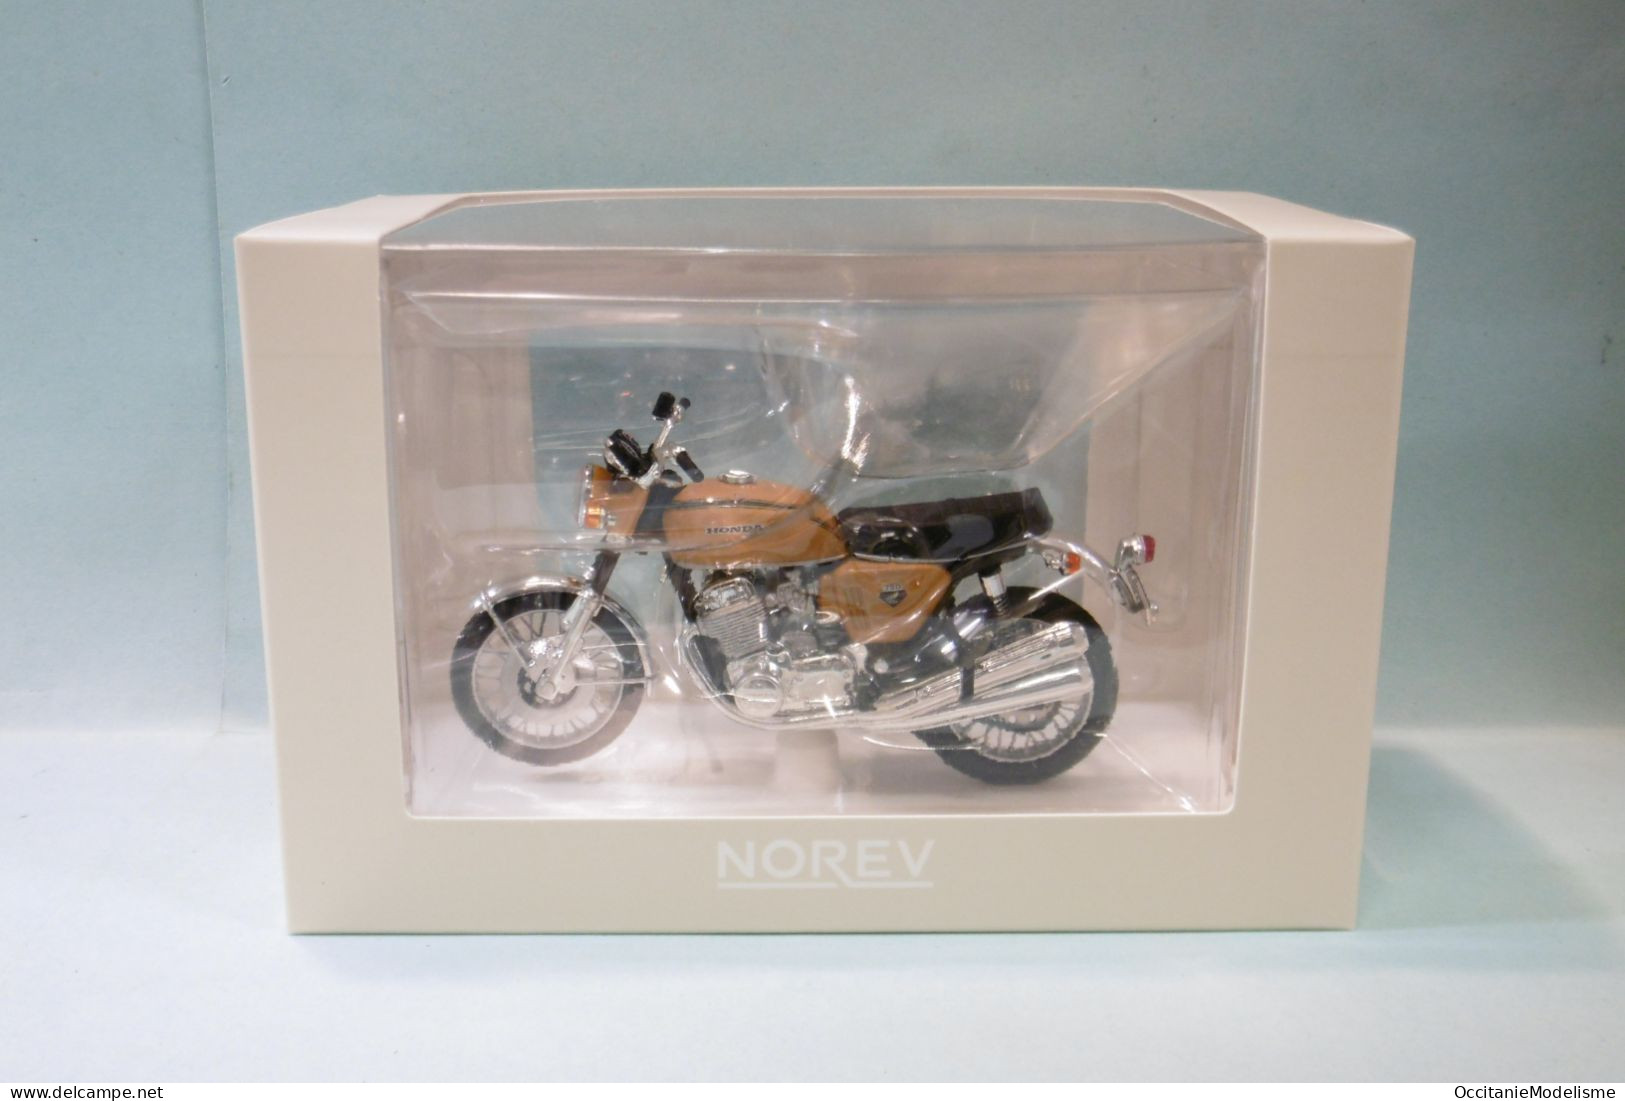 Norev - Moto HONDA CB750 1969 orange métallisé réf. 182025 Neuf 1/18